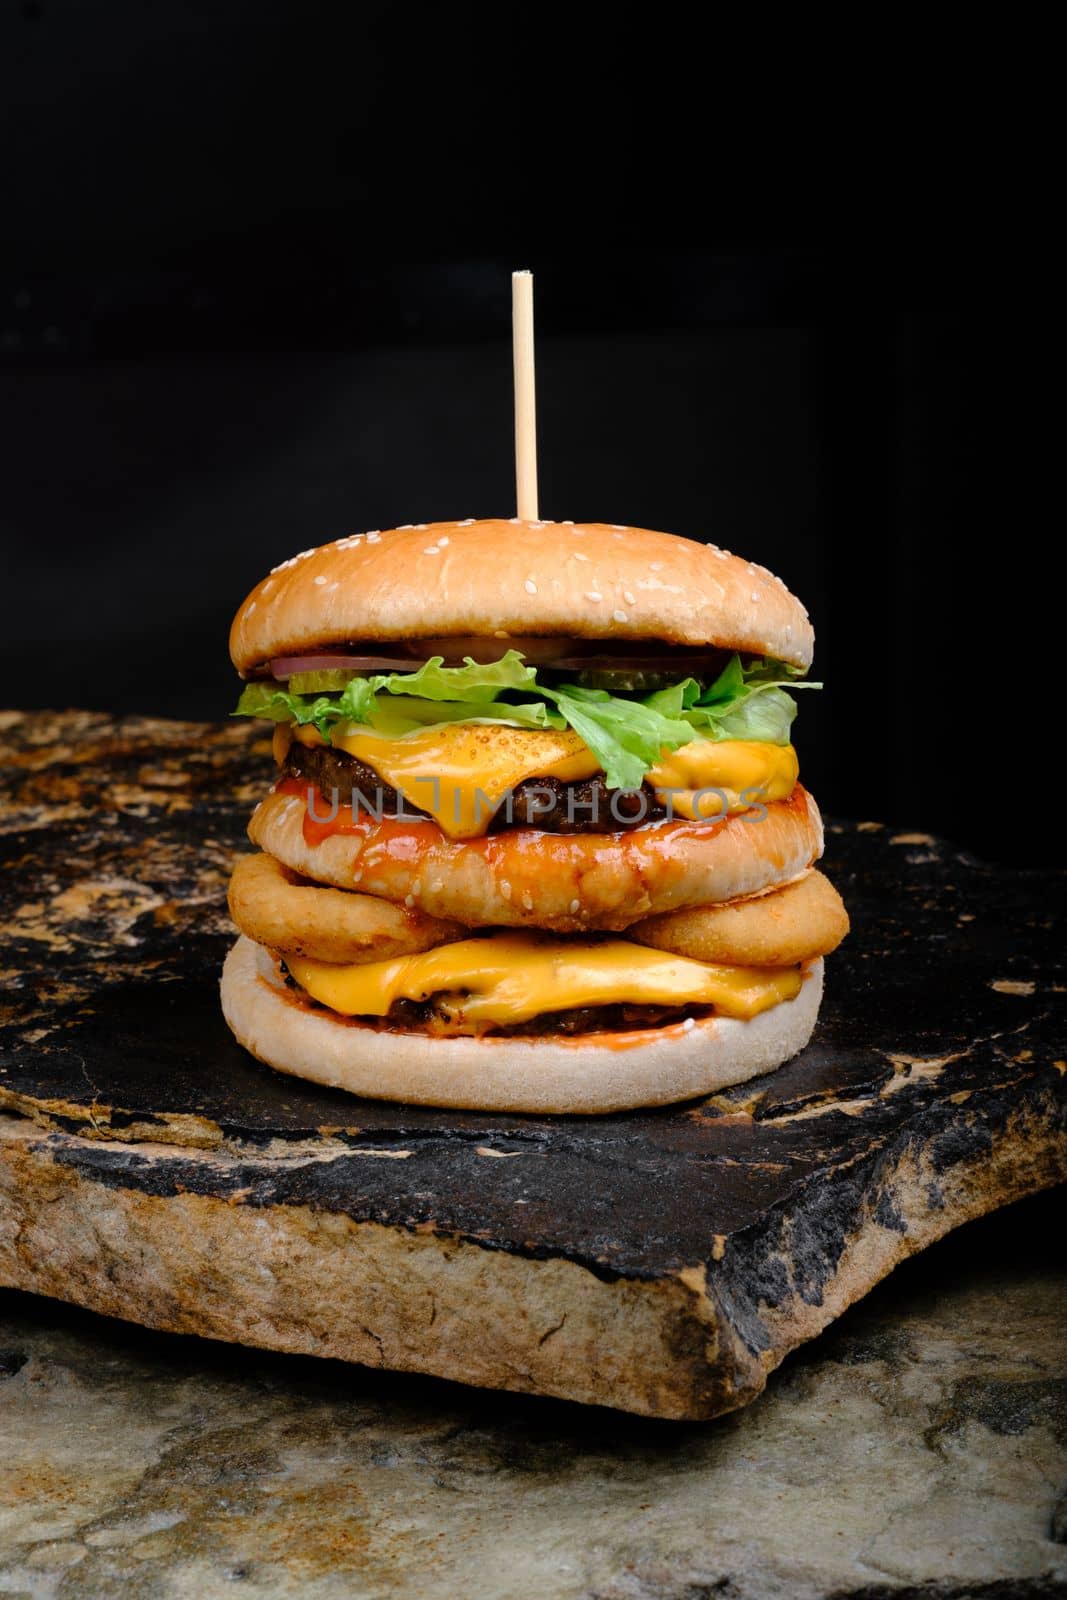 Rustic tasty Burger on Stone Background dark